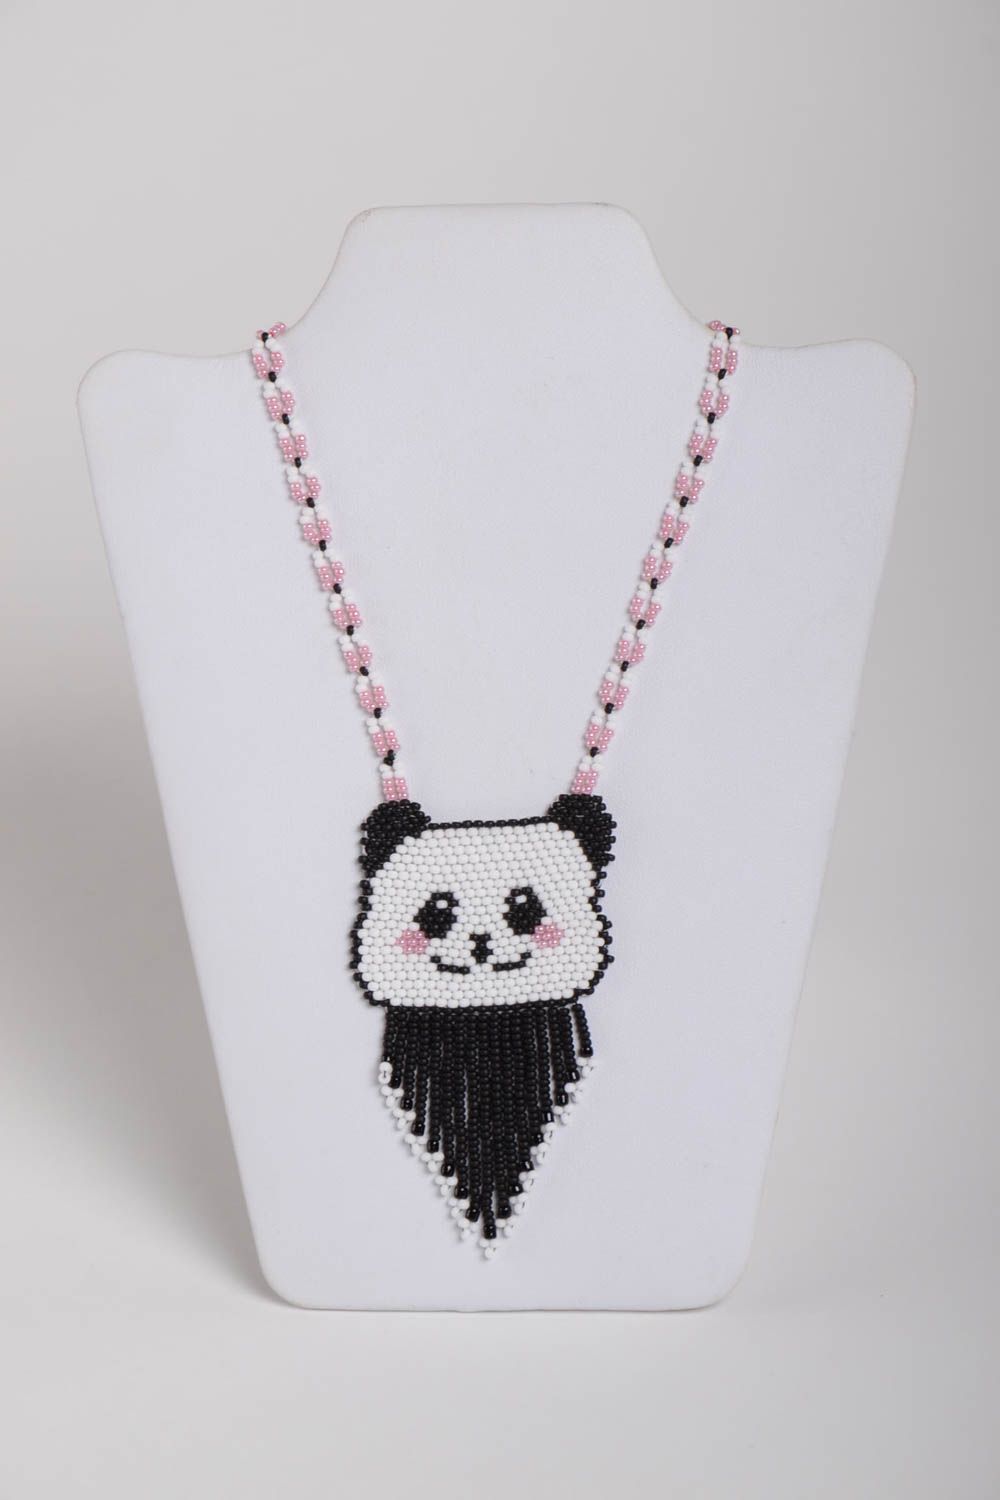 Small handmade beaded neck pendant childrens pendant jewelry designs photo 2